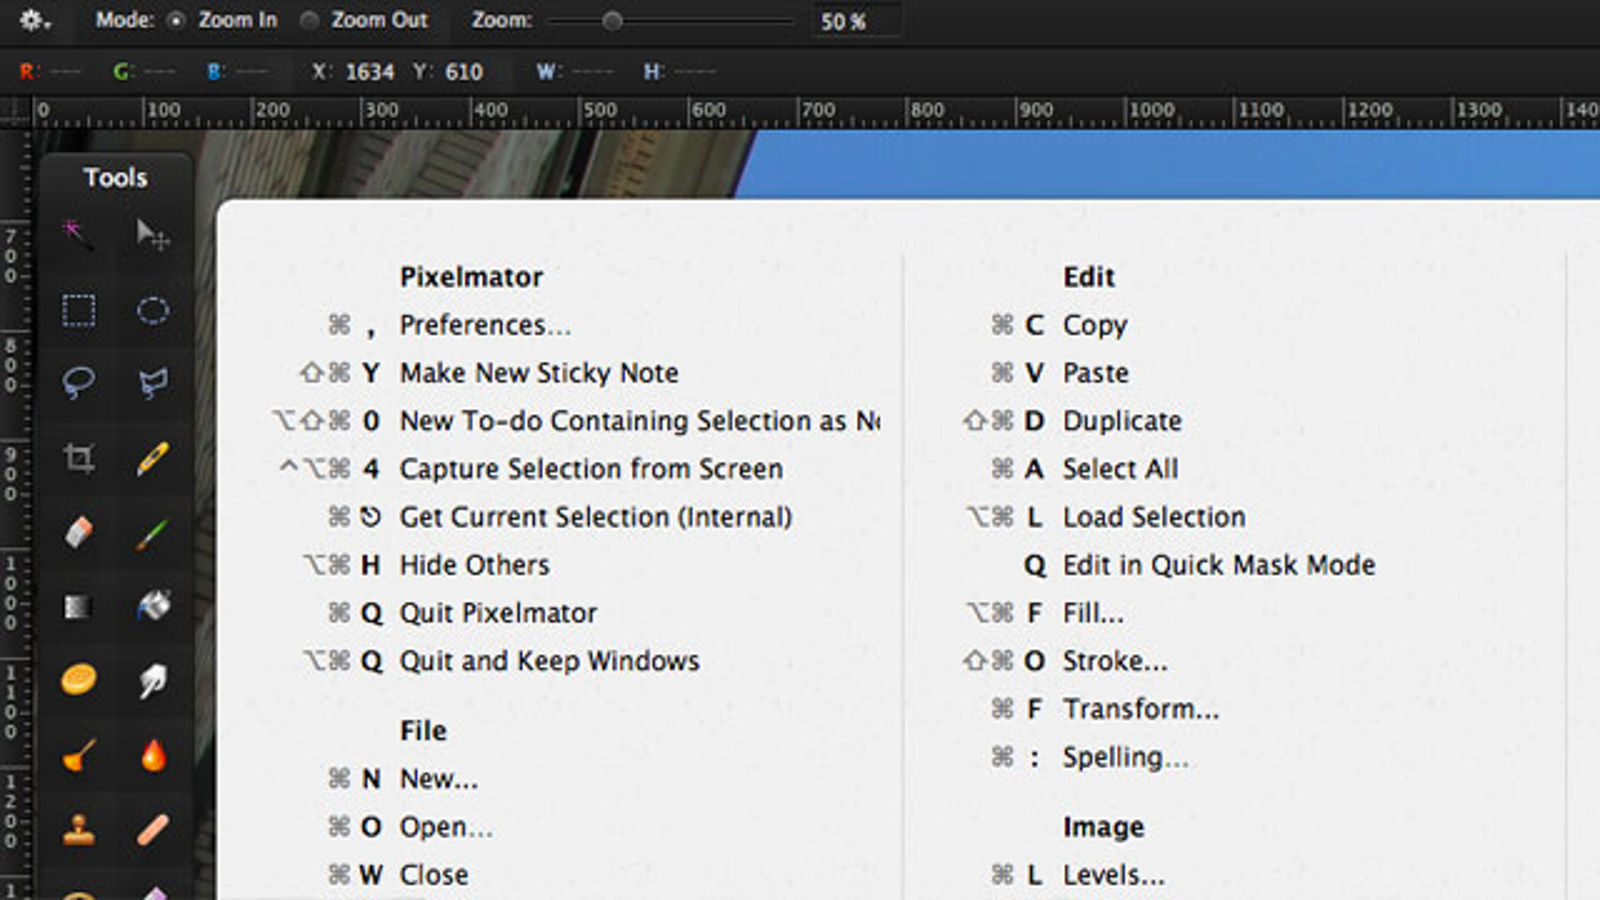 mac keyboard shortcuts for gmail font size